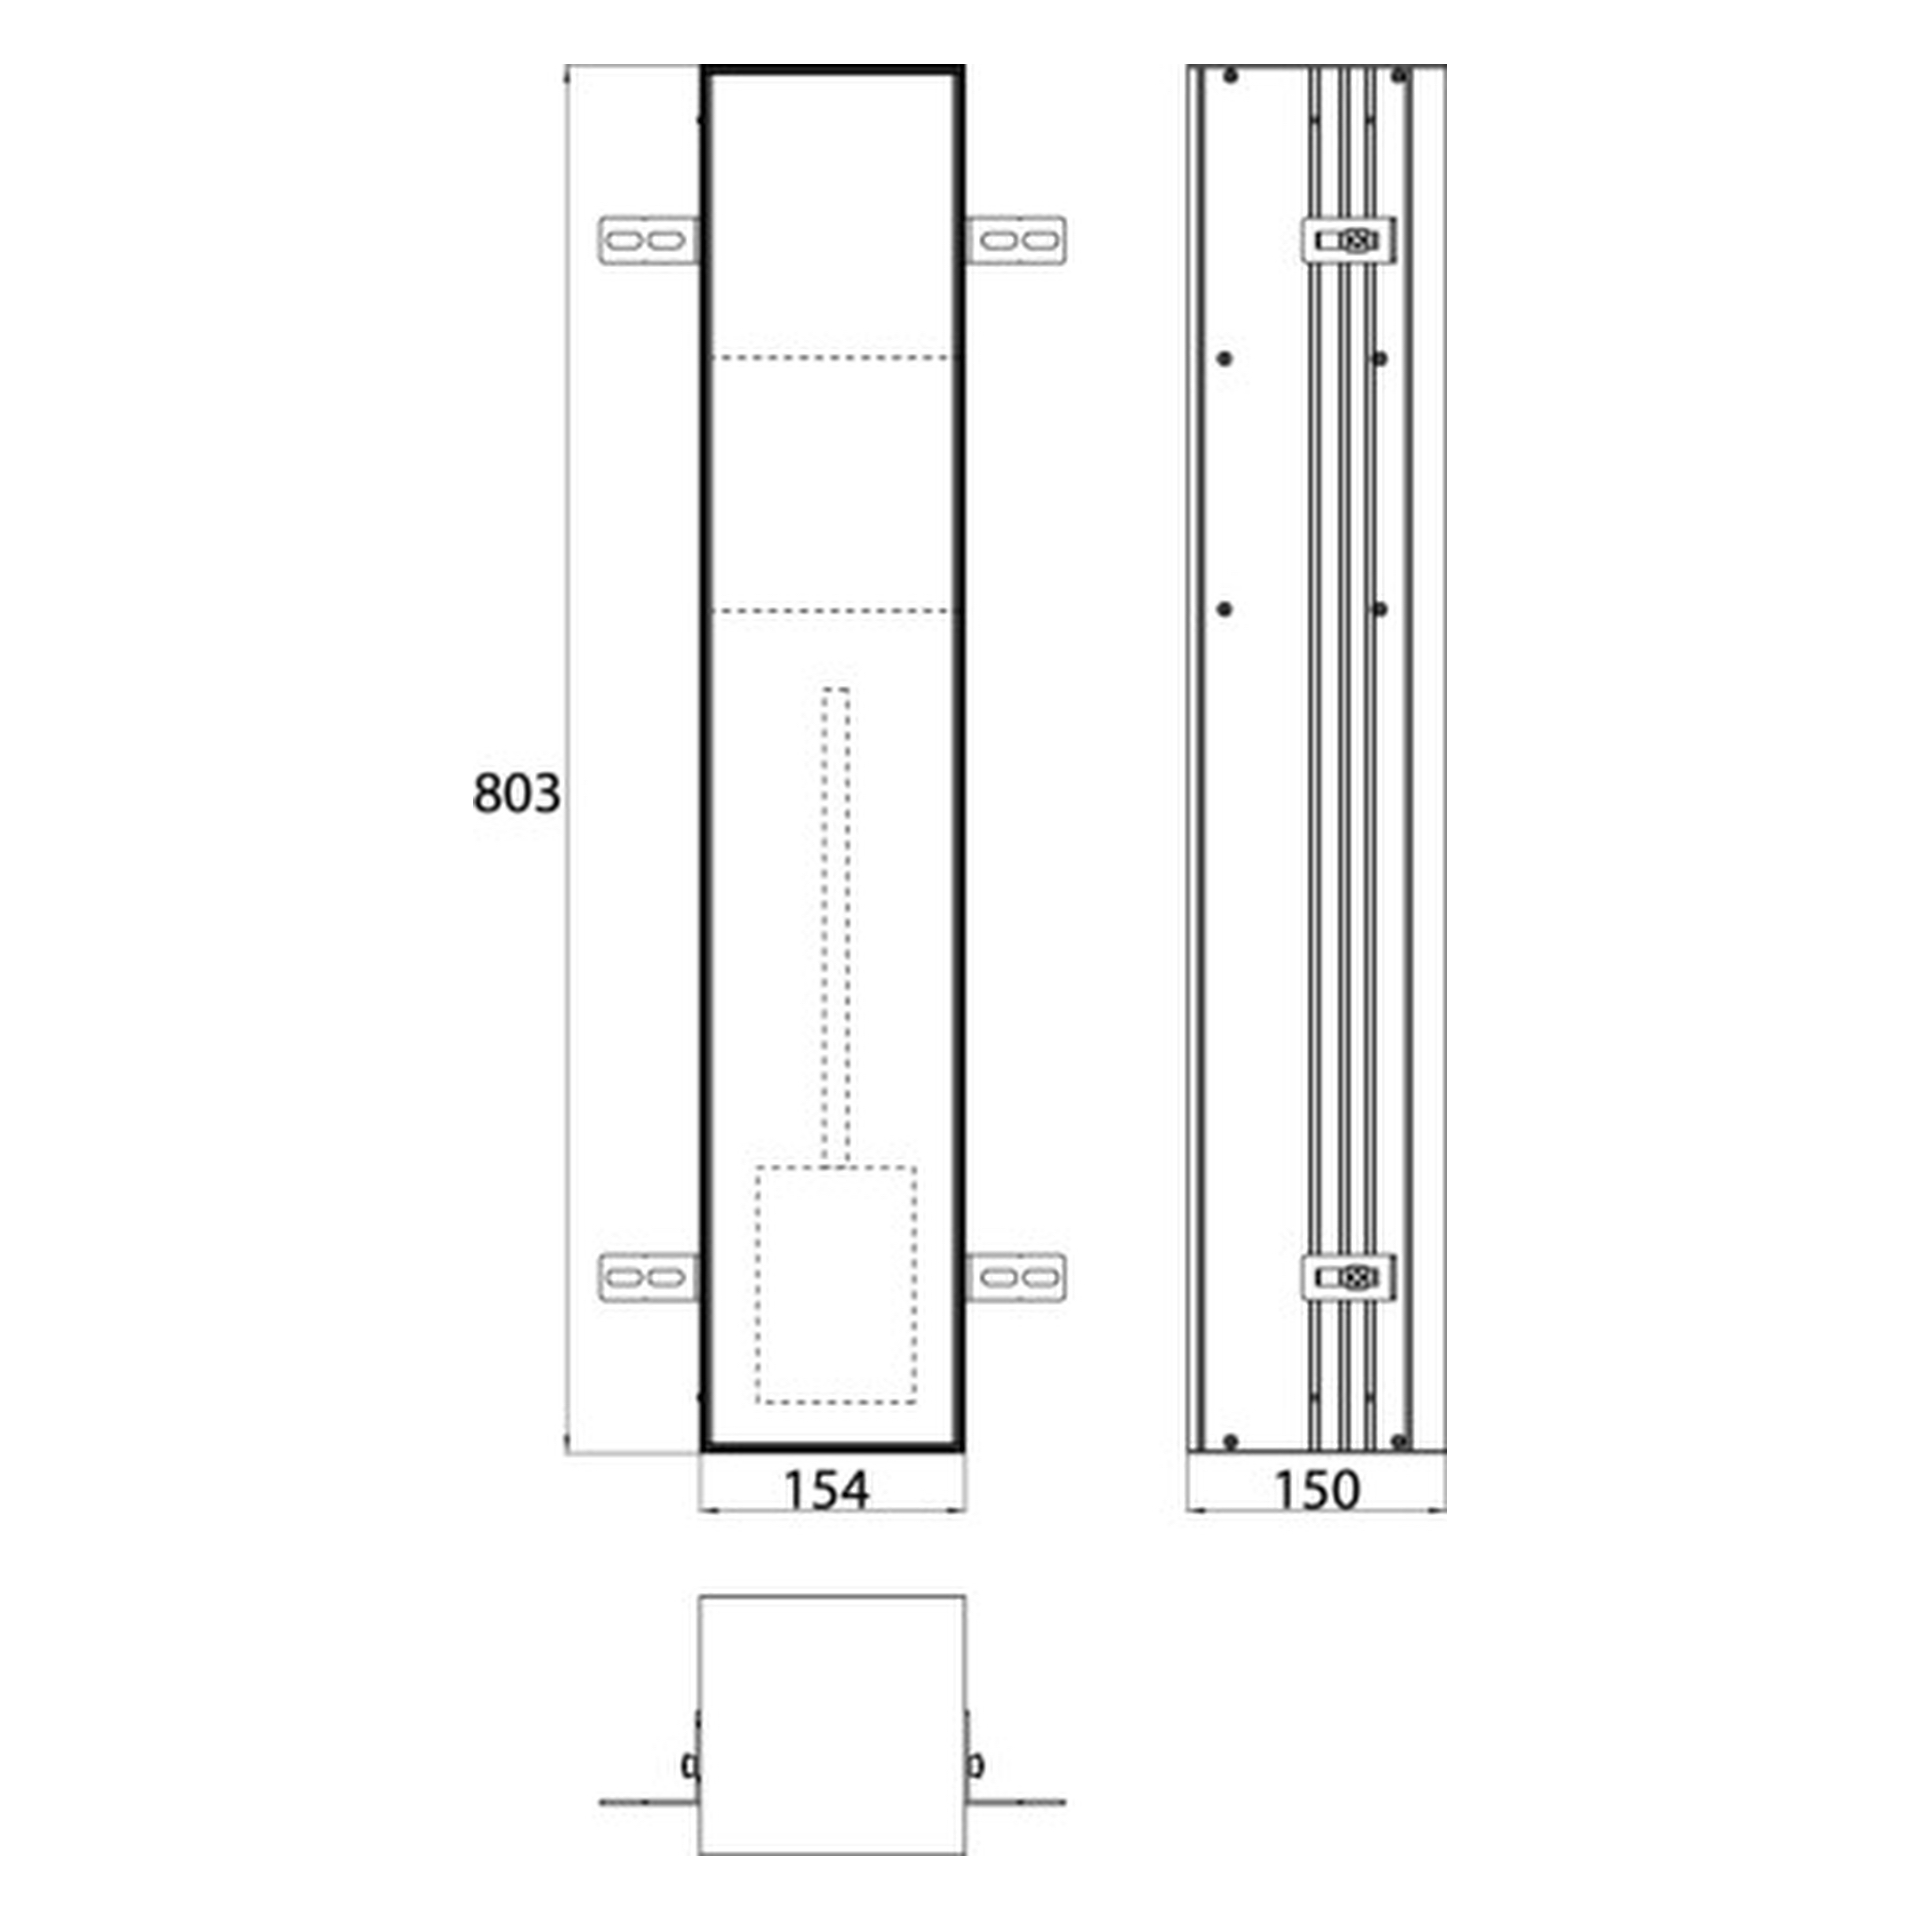 WC-Modul asis plus, Unterputz Papierentnahme oben, 803 mm, Tür links